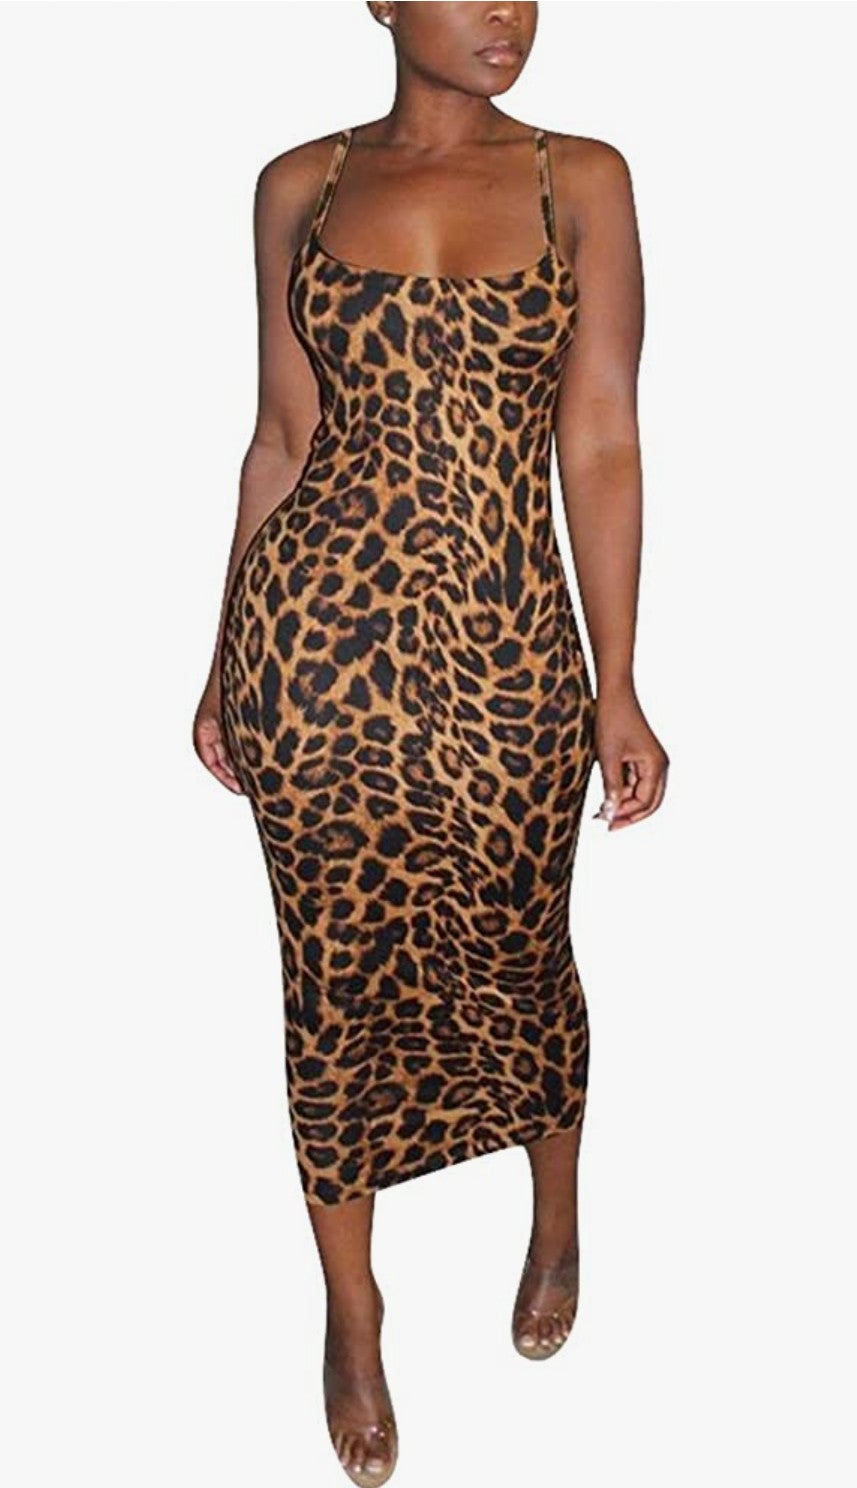 Leopard Knitted Spaghetti Strap Dress